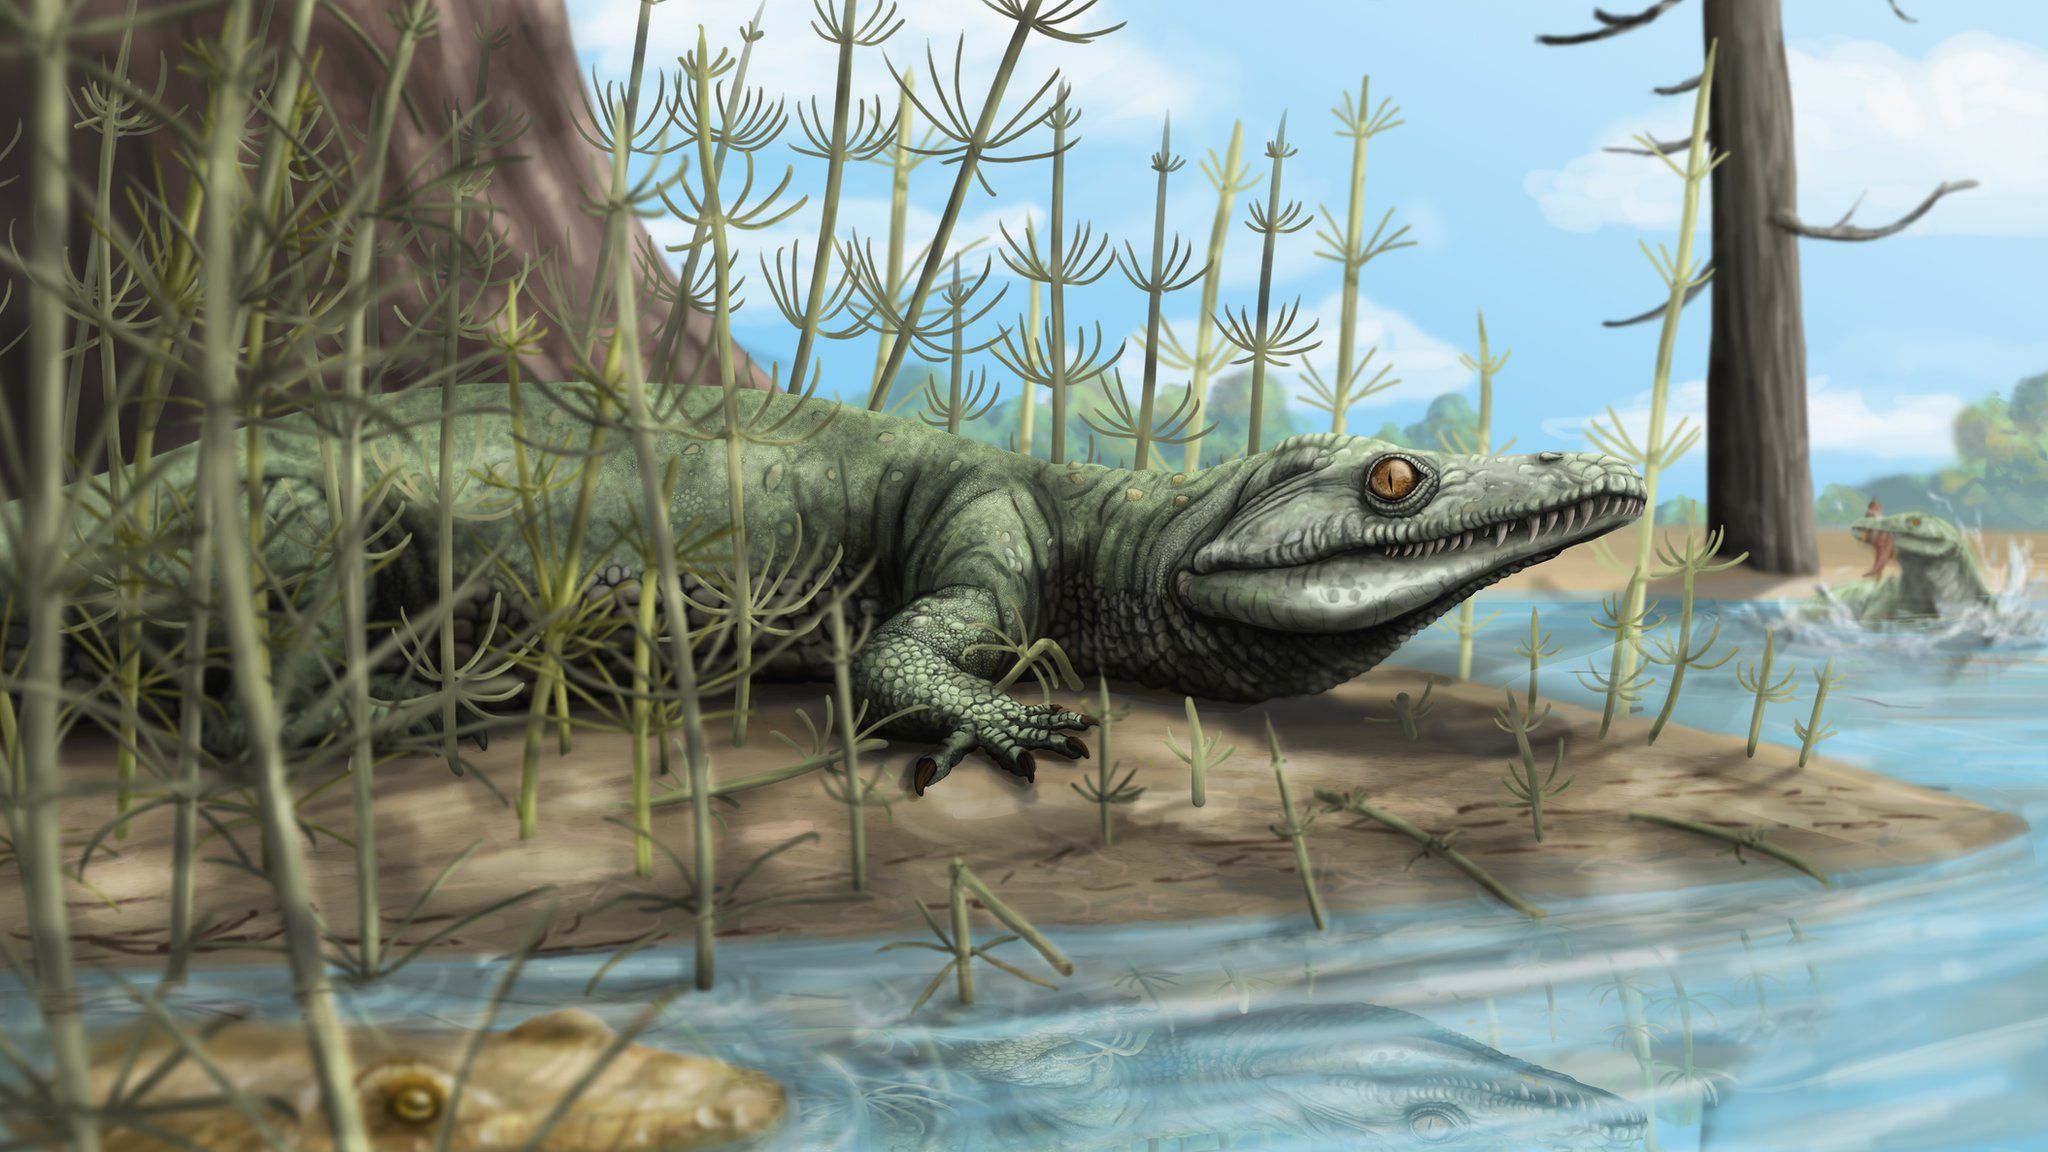 T. rex may have had lips like a modern lizard's